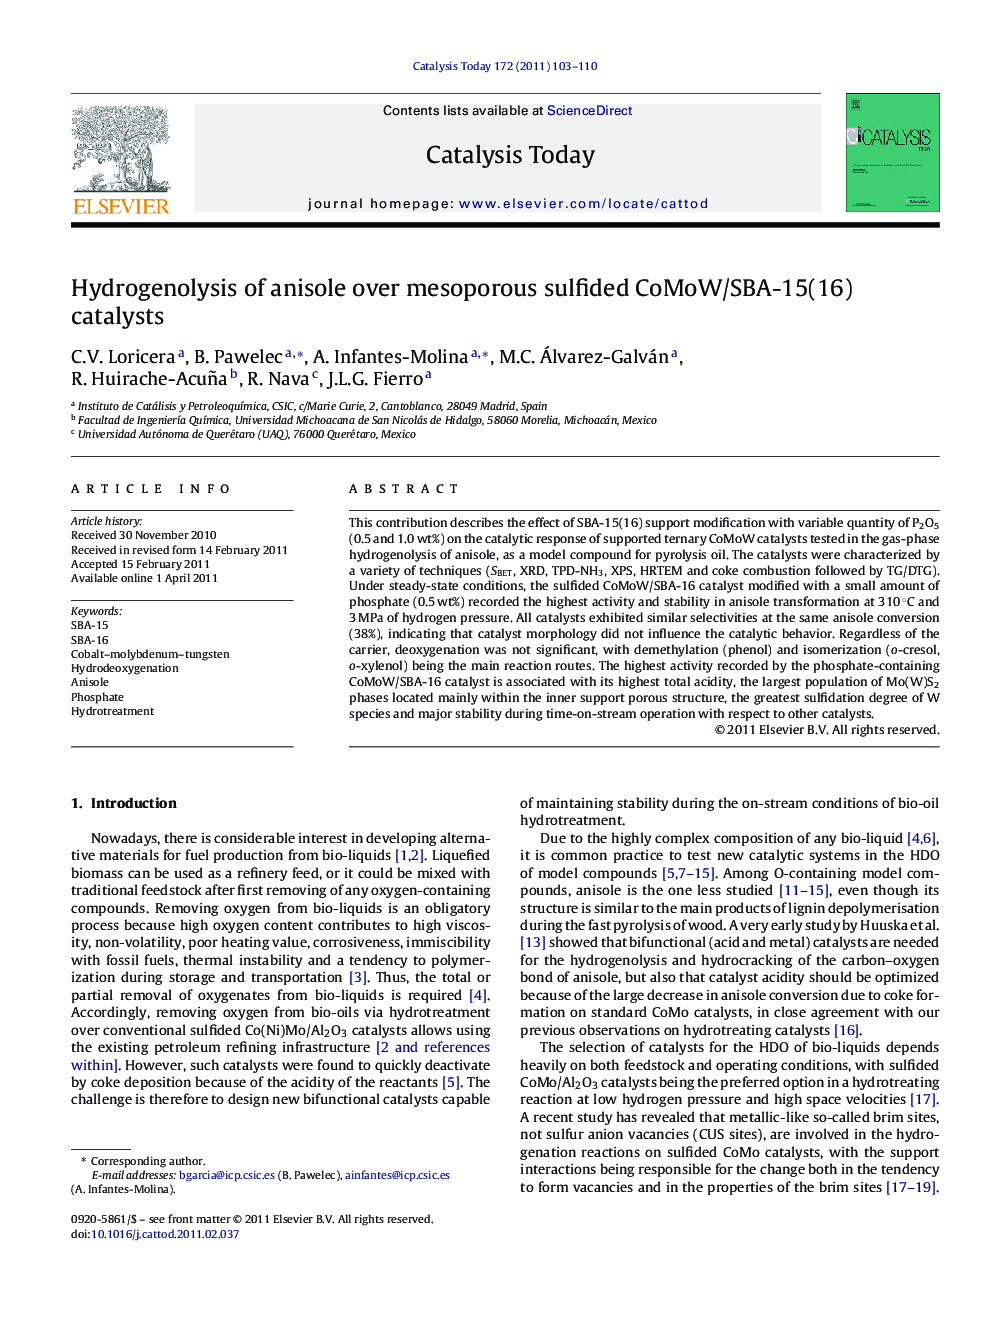 Hydrogenolysis of anisole over mesoporous sulfided CoMoW/SBA-15(16) catalysts